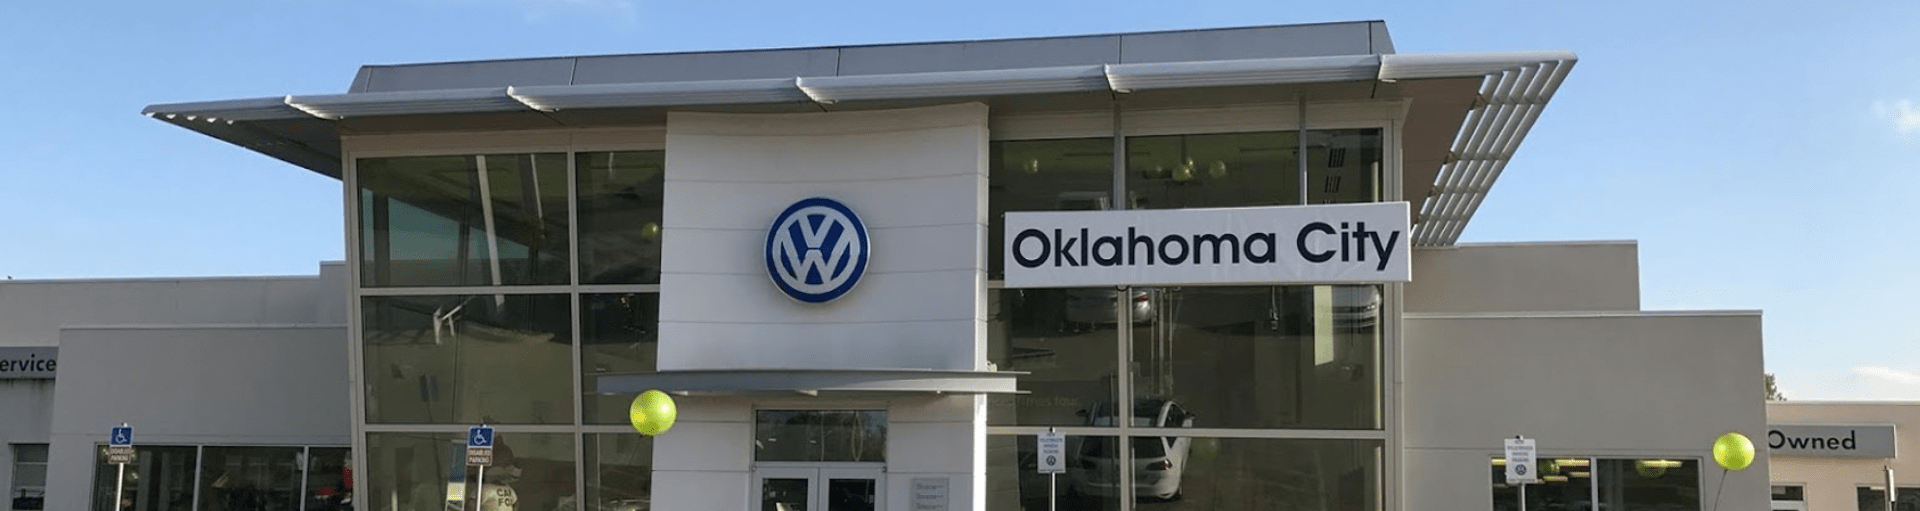 Oklahoma City Volkswagen Recall Services